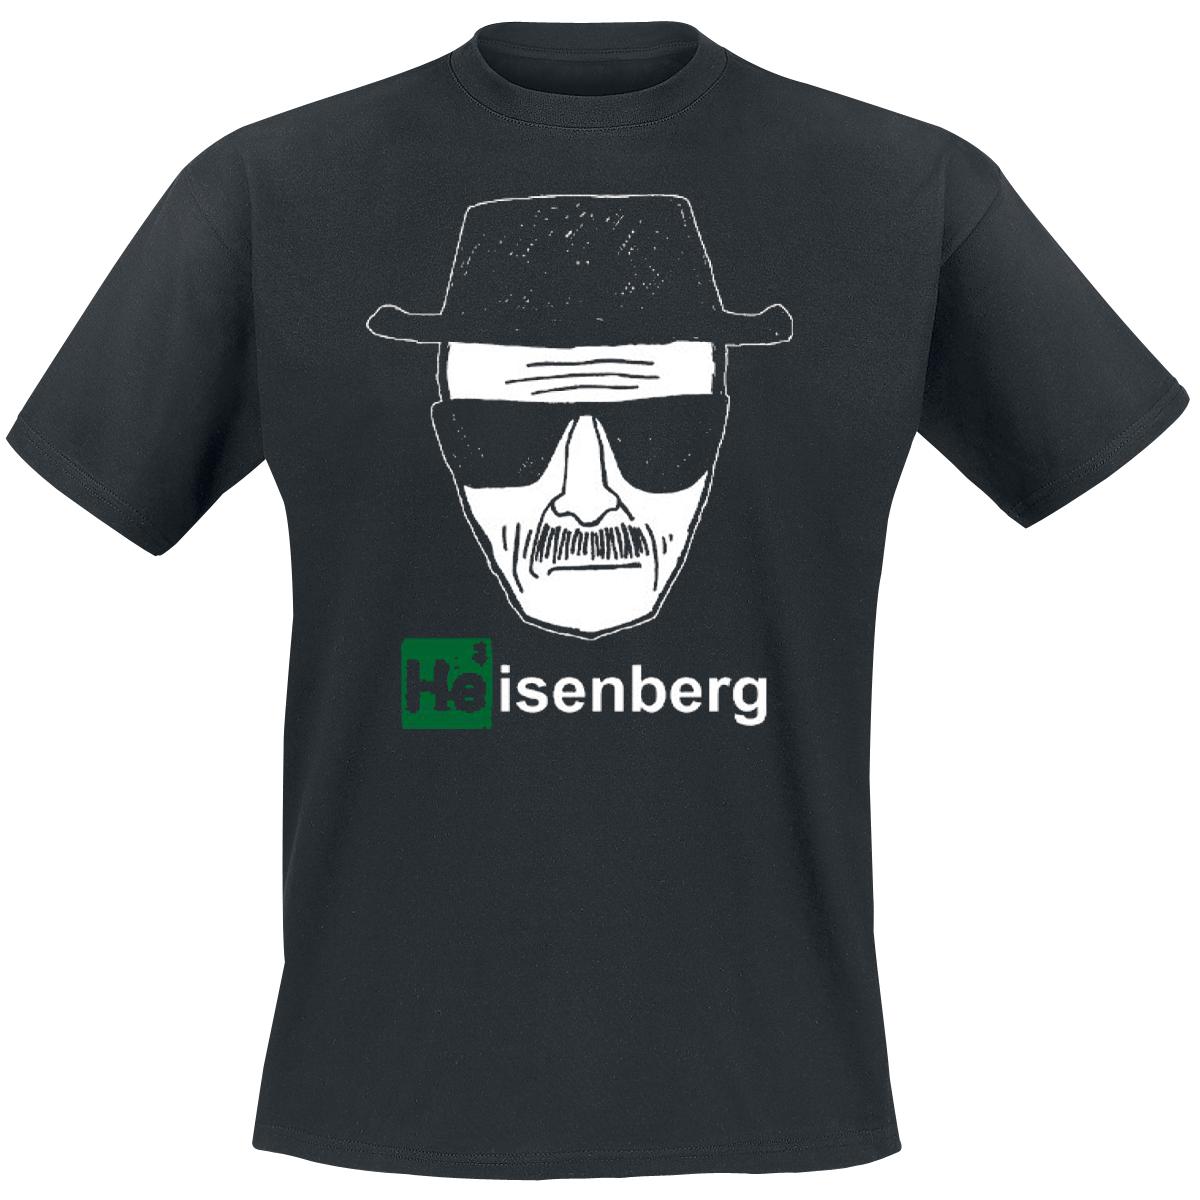 Heisenberg T-shirt Design tee